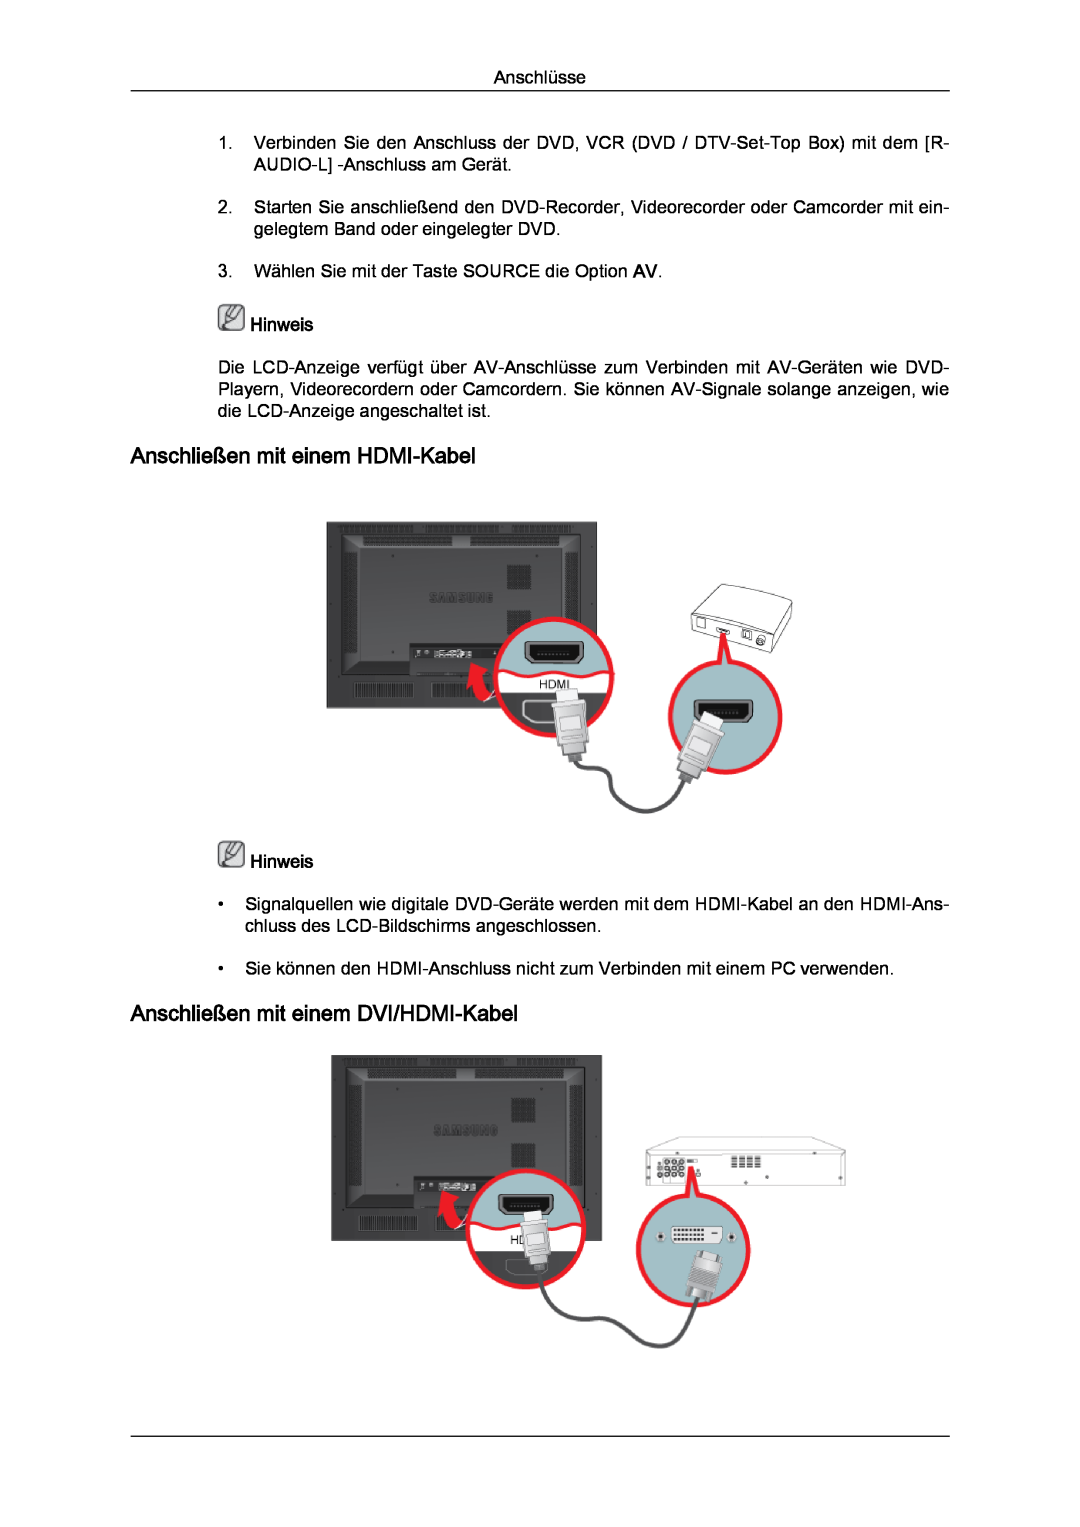 Samsung LH46SOQQSC/EN, LH46SOUQSC/EN manual Anschließen mit einem HDMI-Kabel, Anschließen mit einem DVI/HDMI-Kabel, Hinweis 